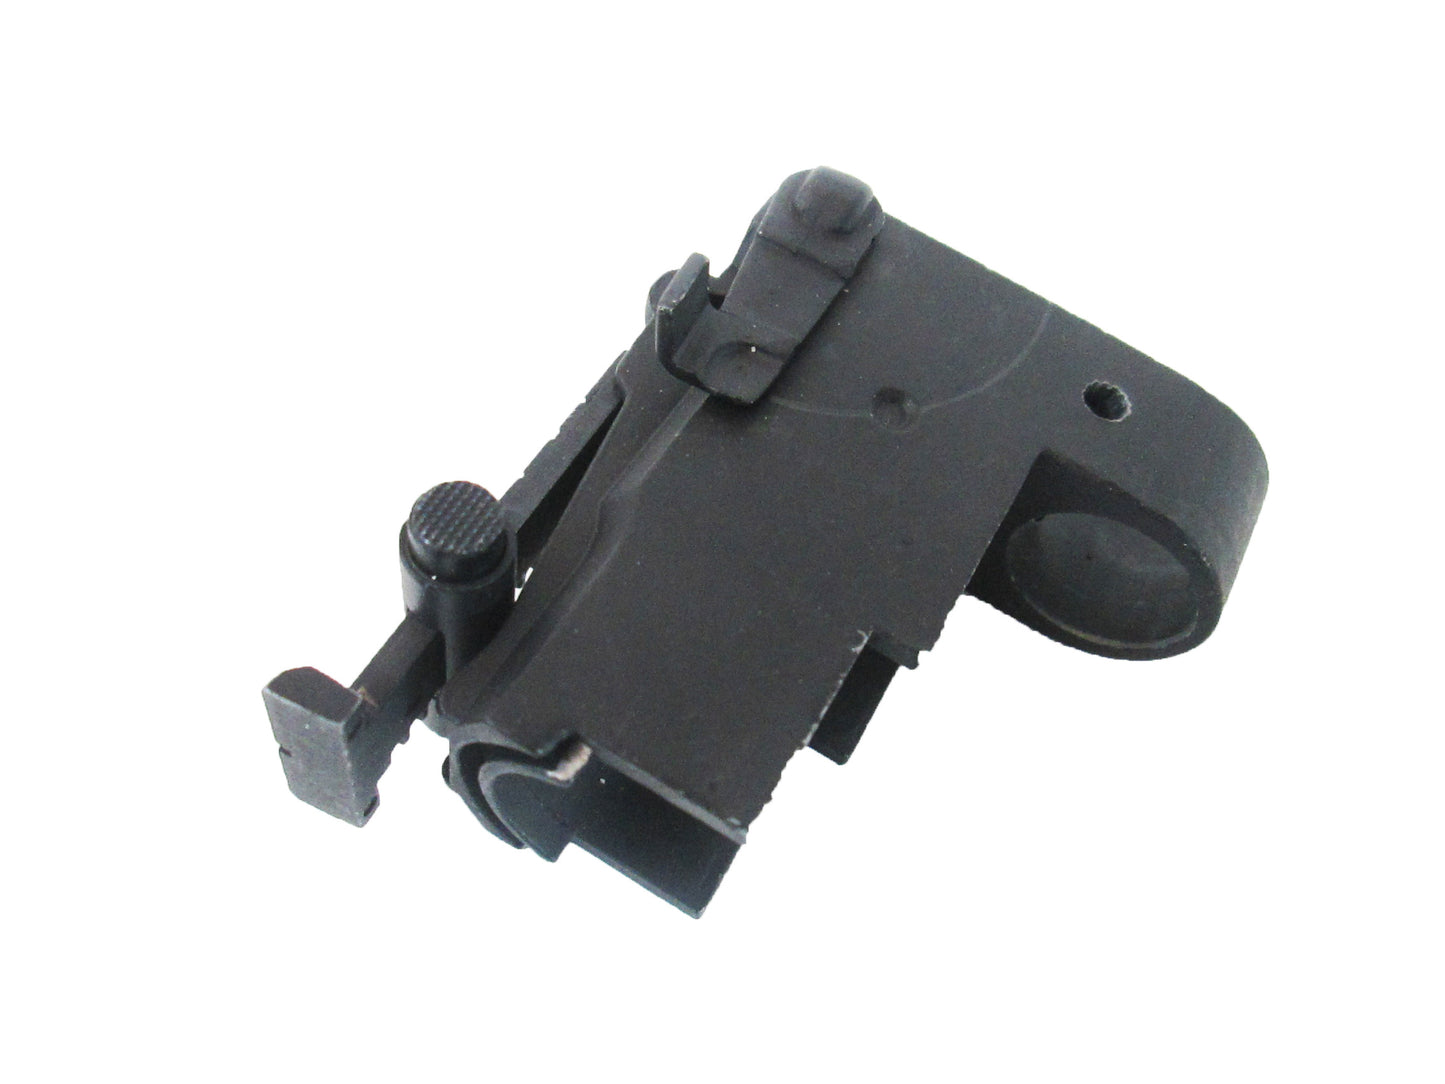 Full Metal AK Rear Sight Block Replacement - Airsoft